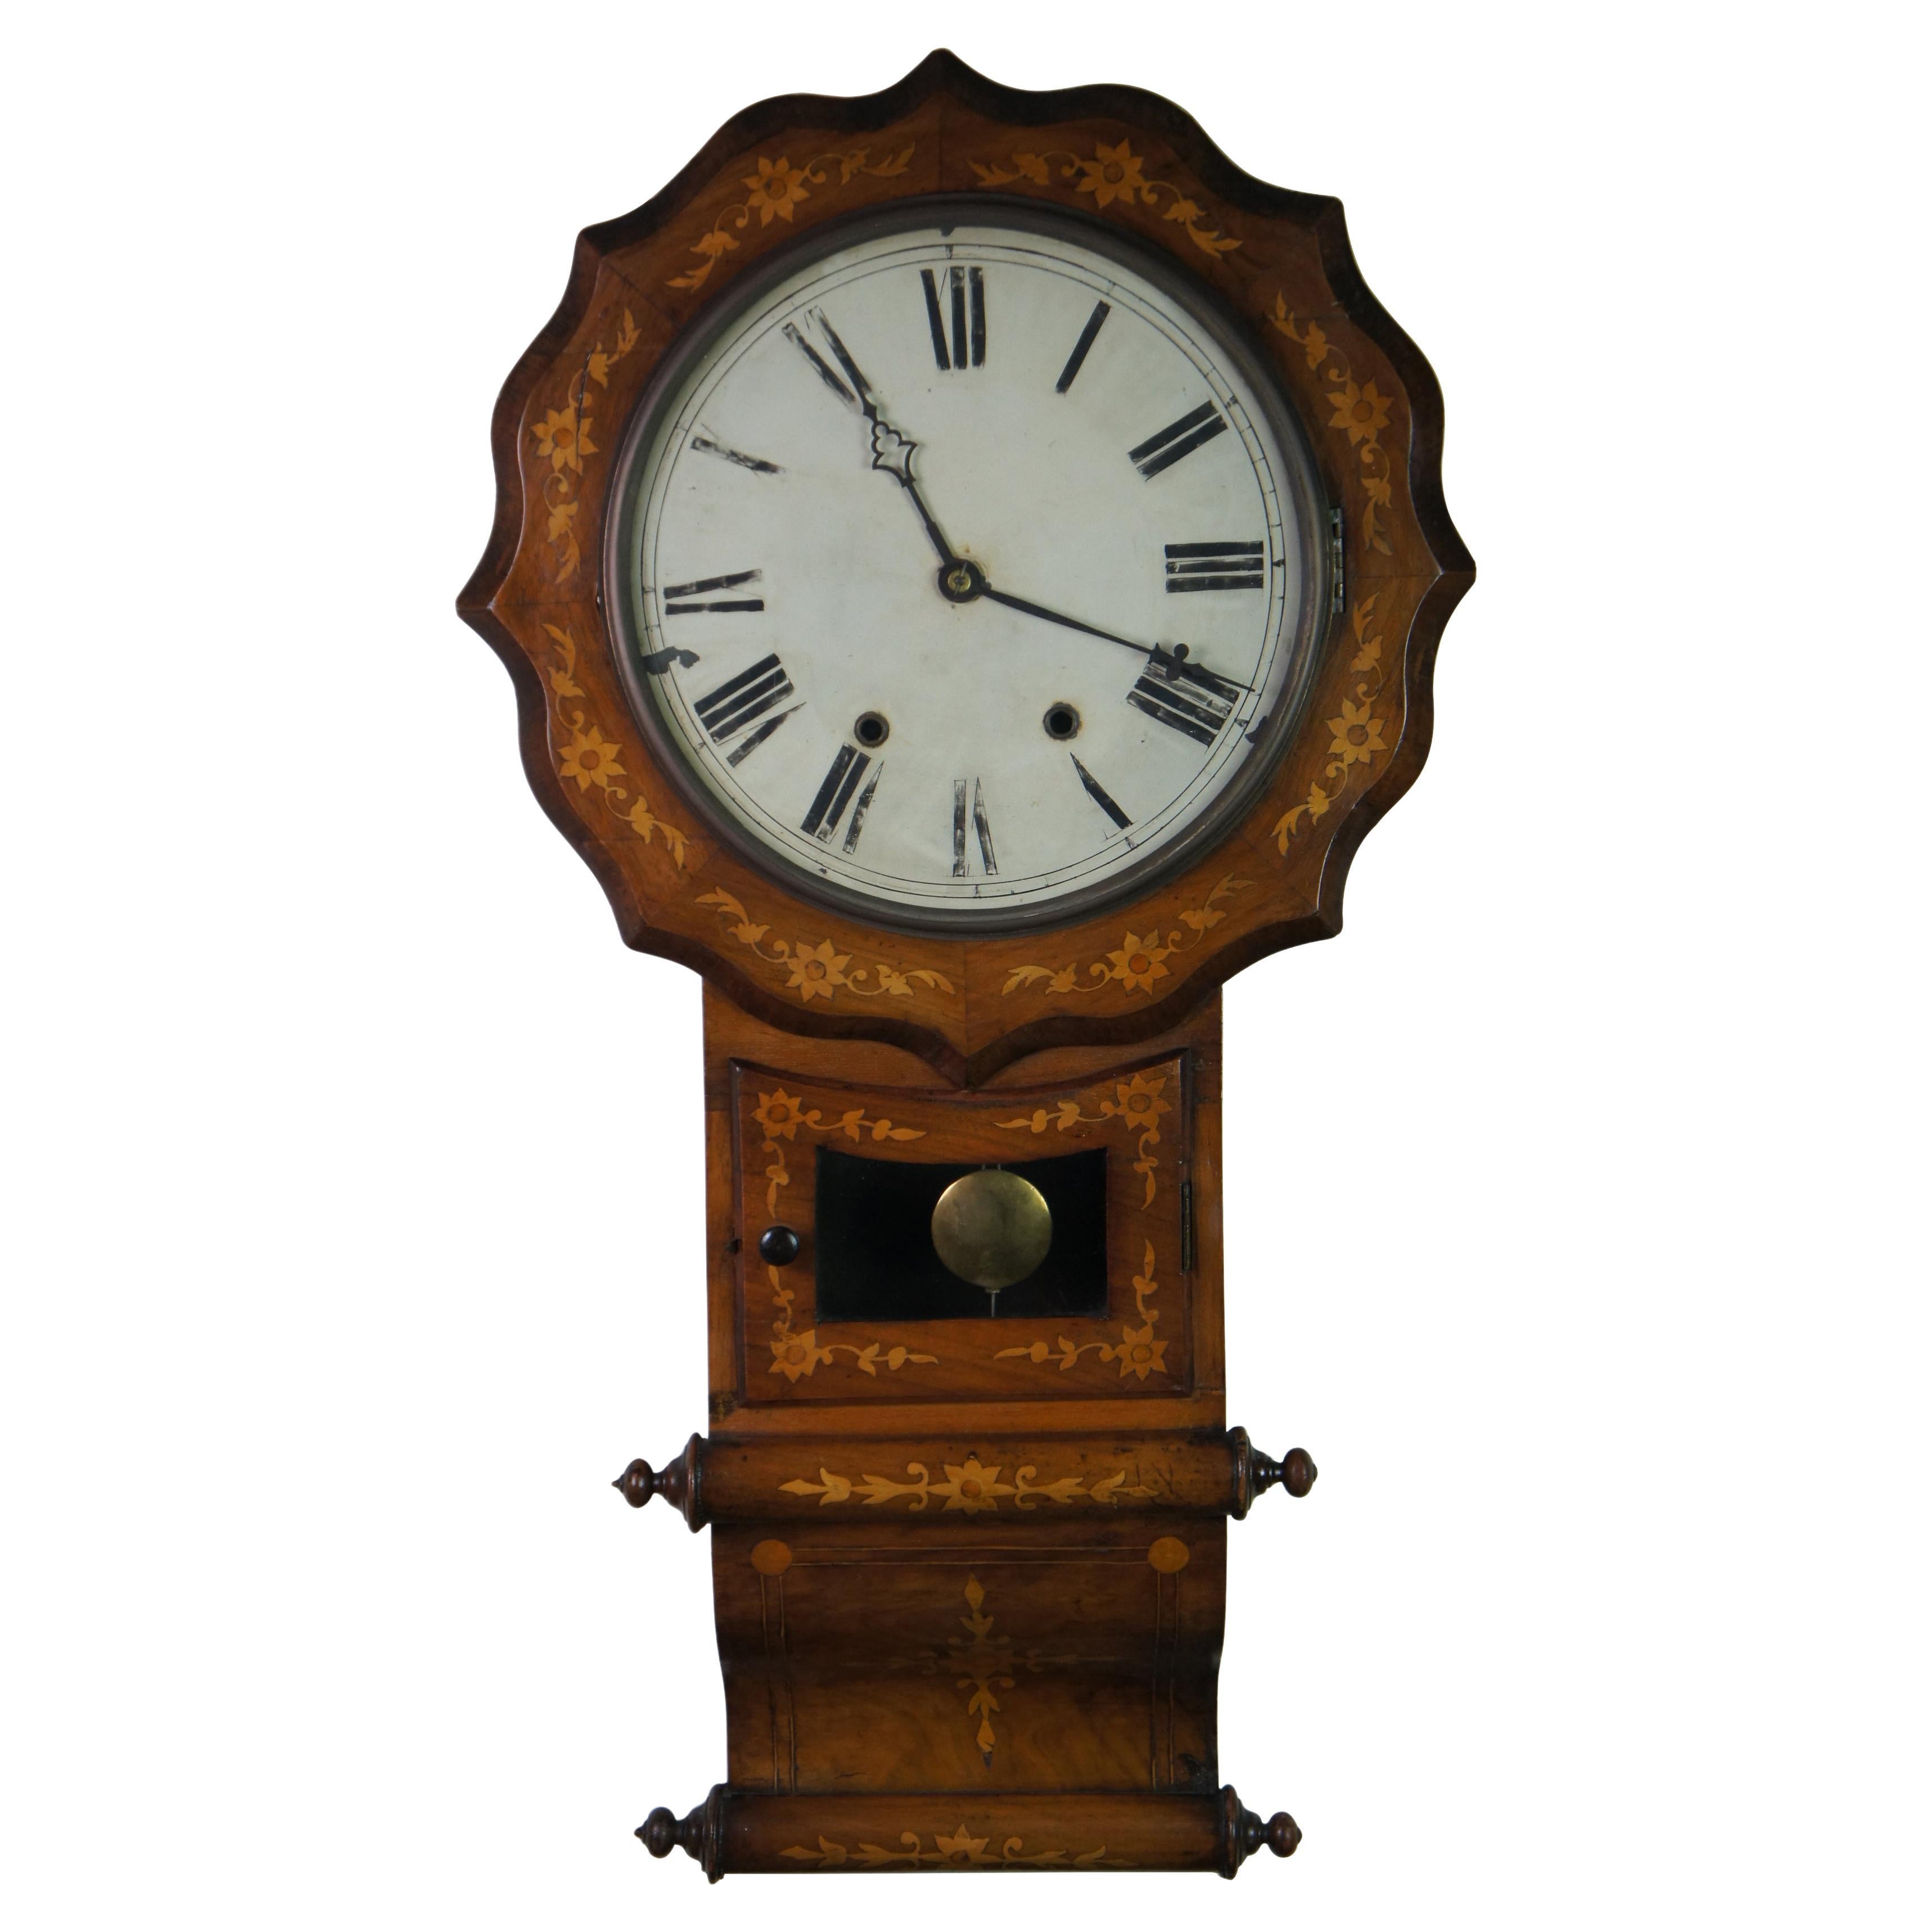 Antique 19th Century Dutch Marquetry Scrolled Floral Inlaid Walnut Wall Clock